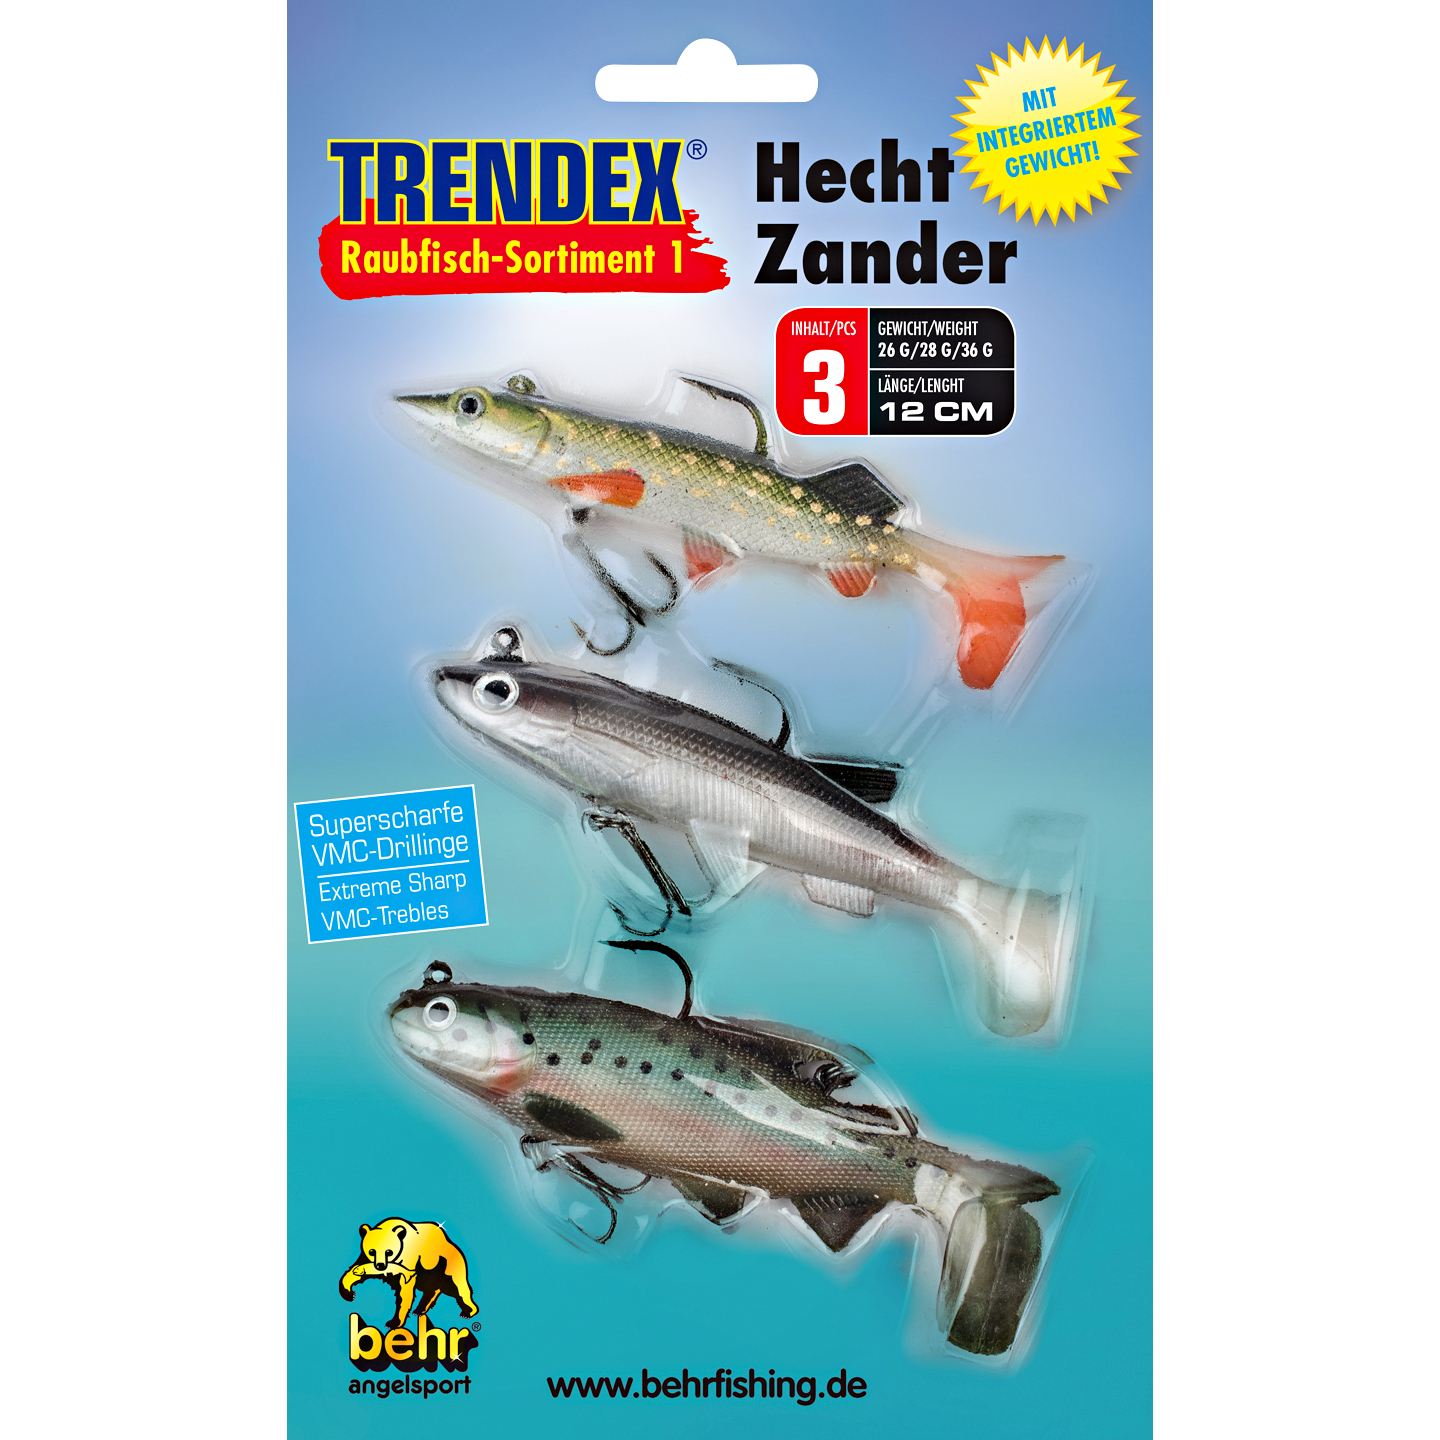 Trendex Raubfisch-Sortiment 1 (Hecht/Zander) 